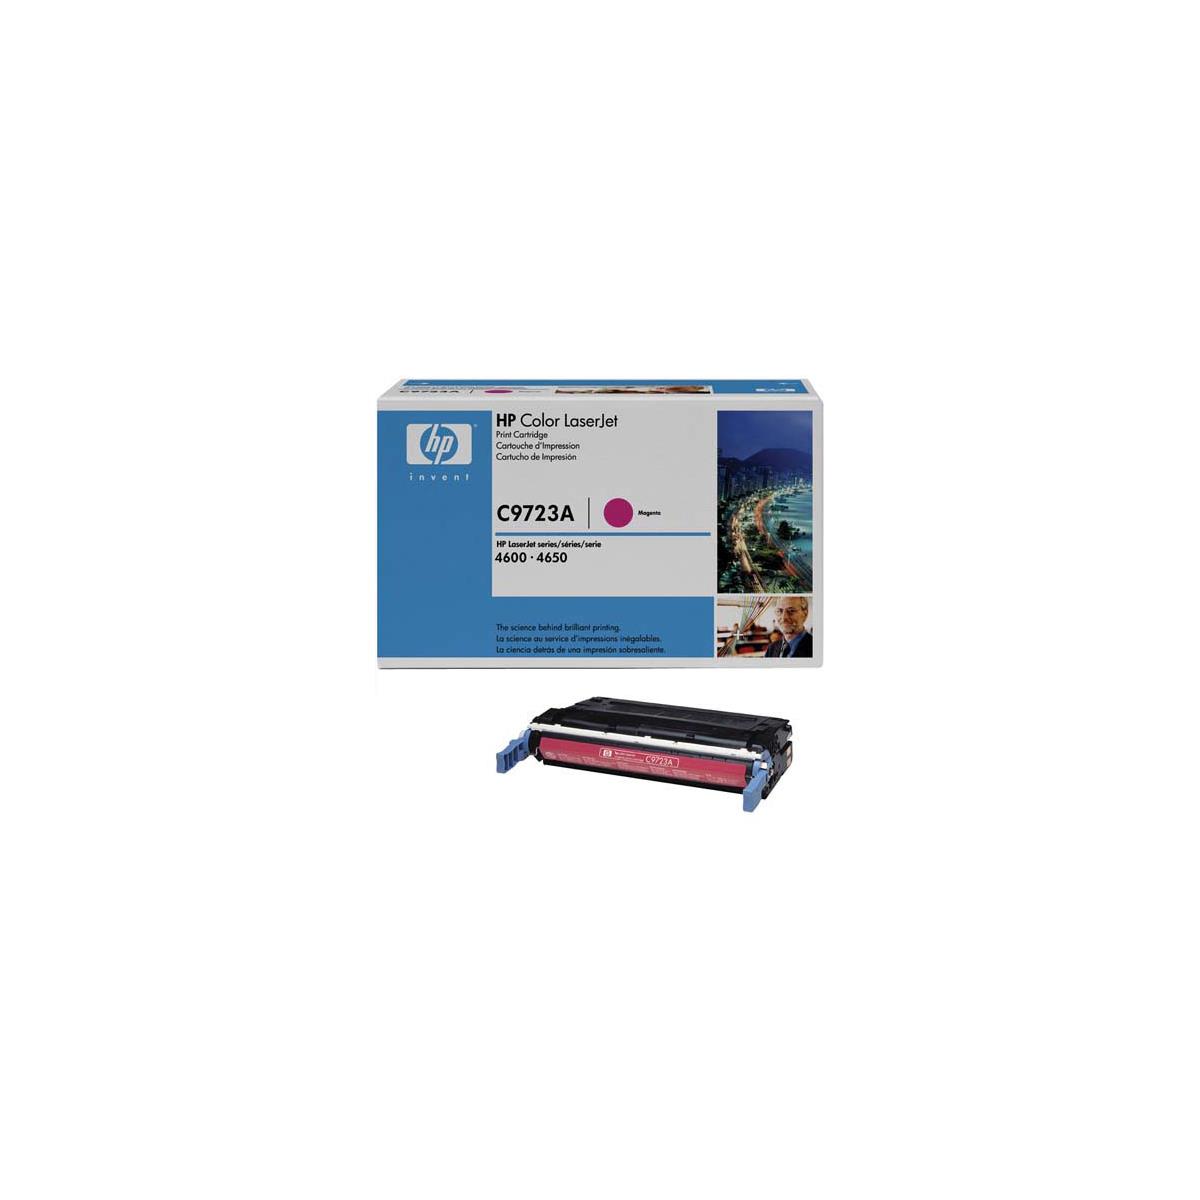 

HP C9723A Magenta Cartridge for Color LaserJet Printers